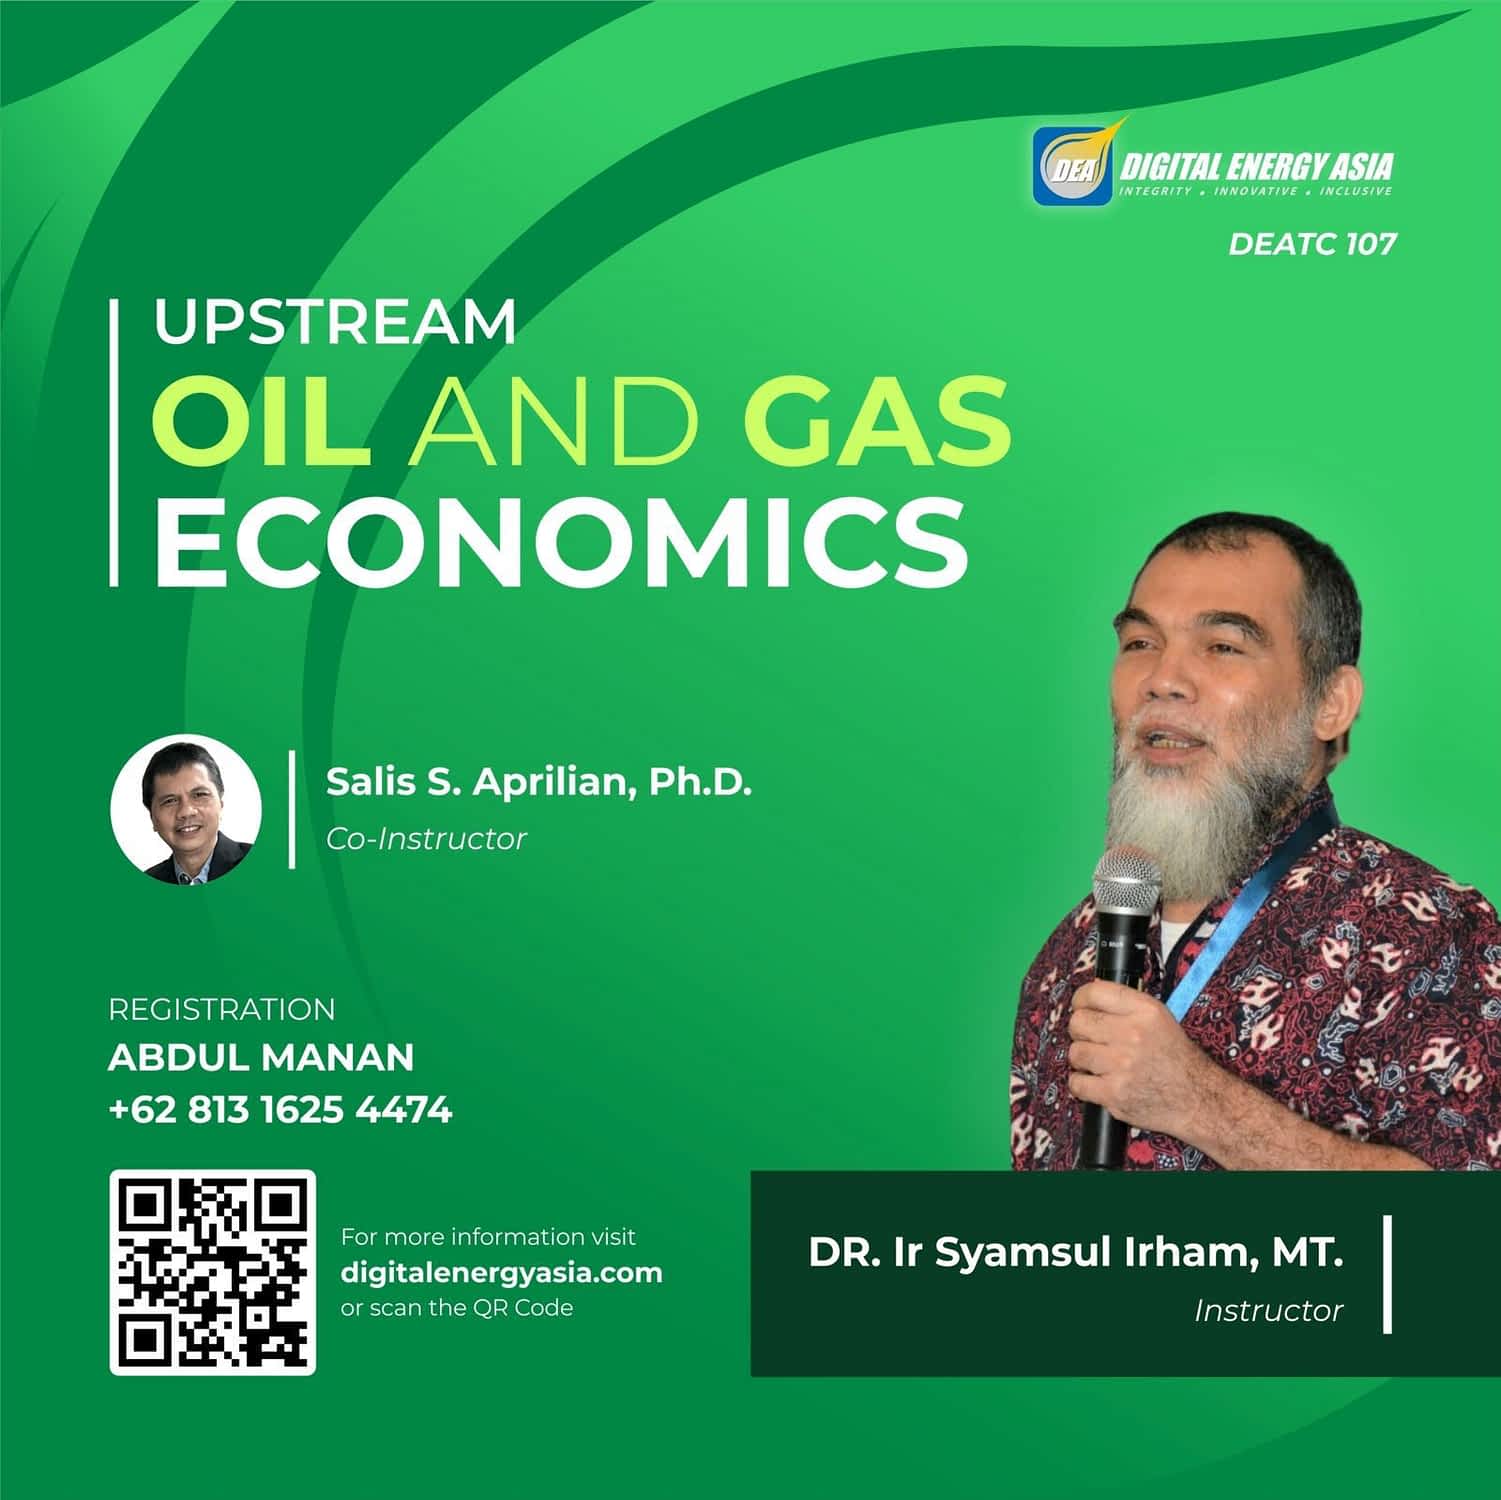 DEATC 107 - Upstream Oil and Gas Economics